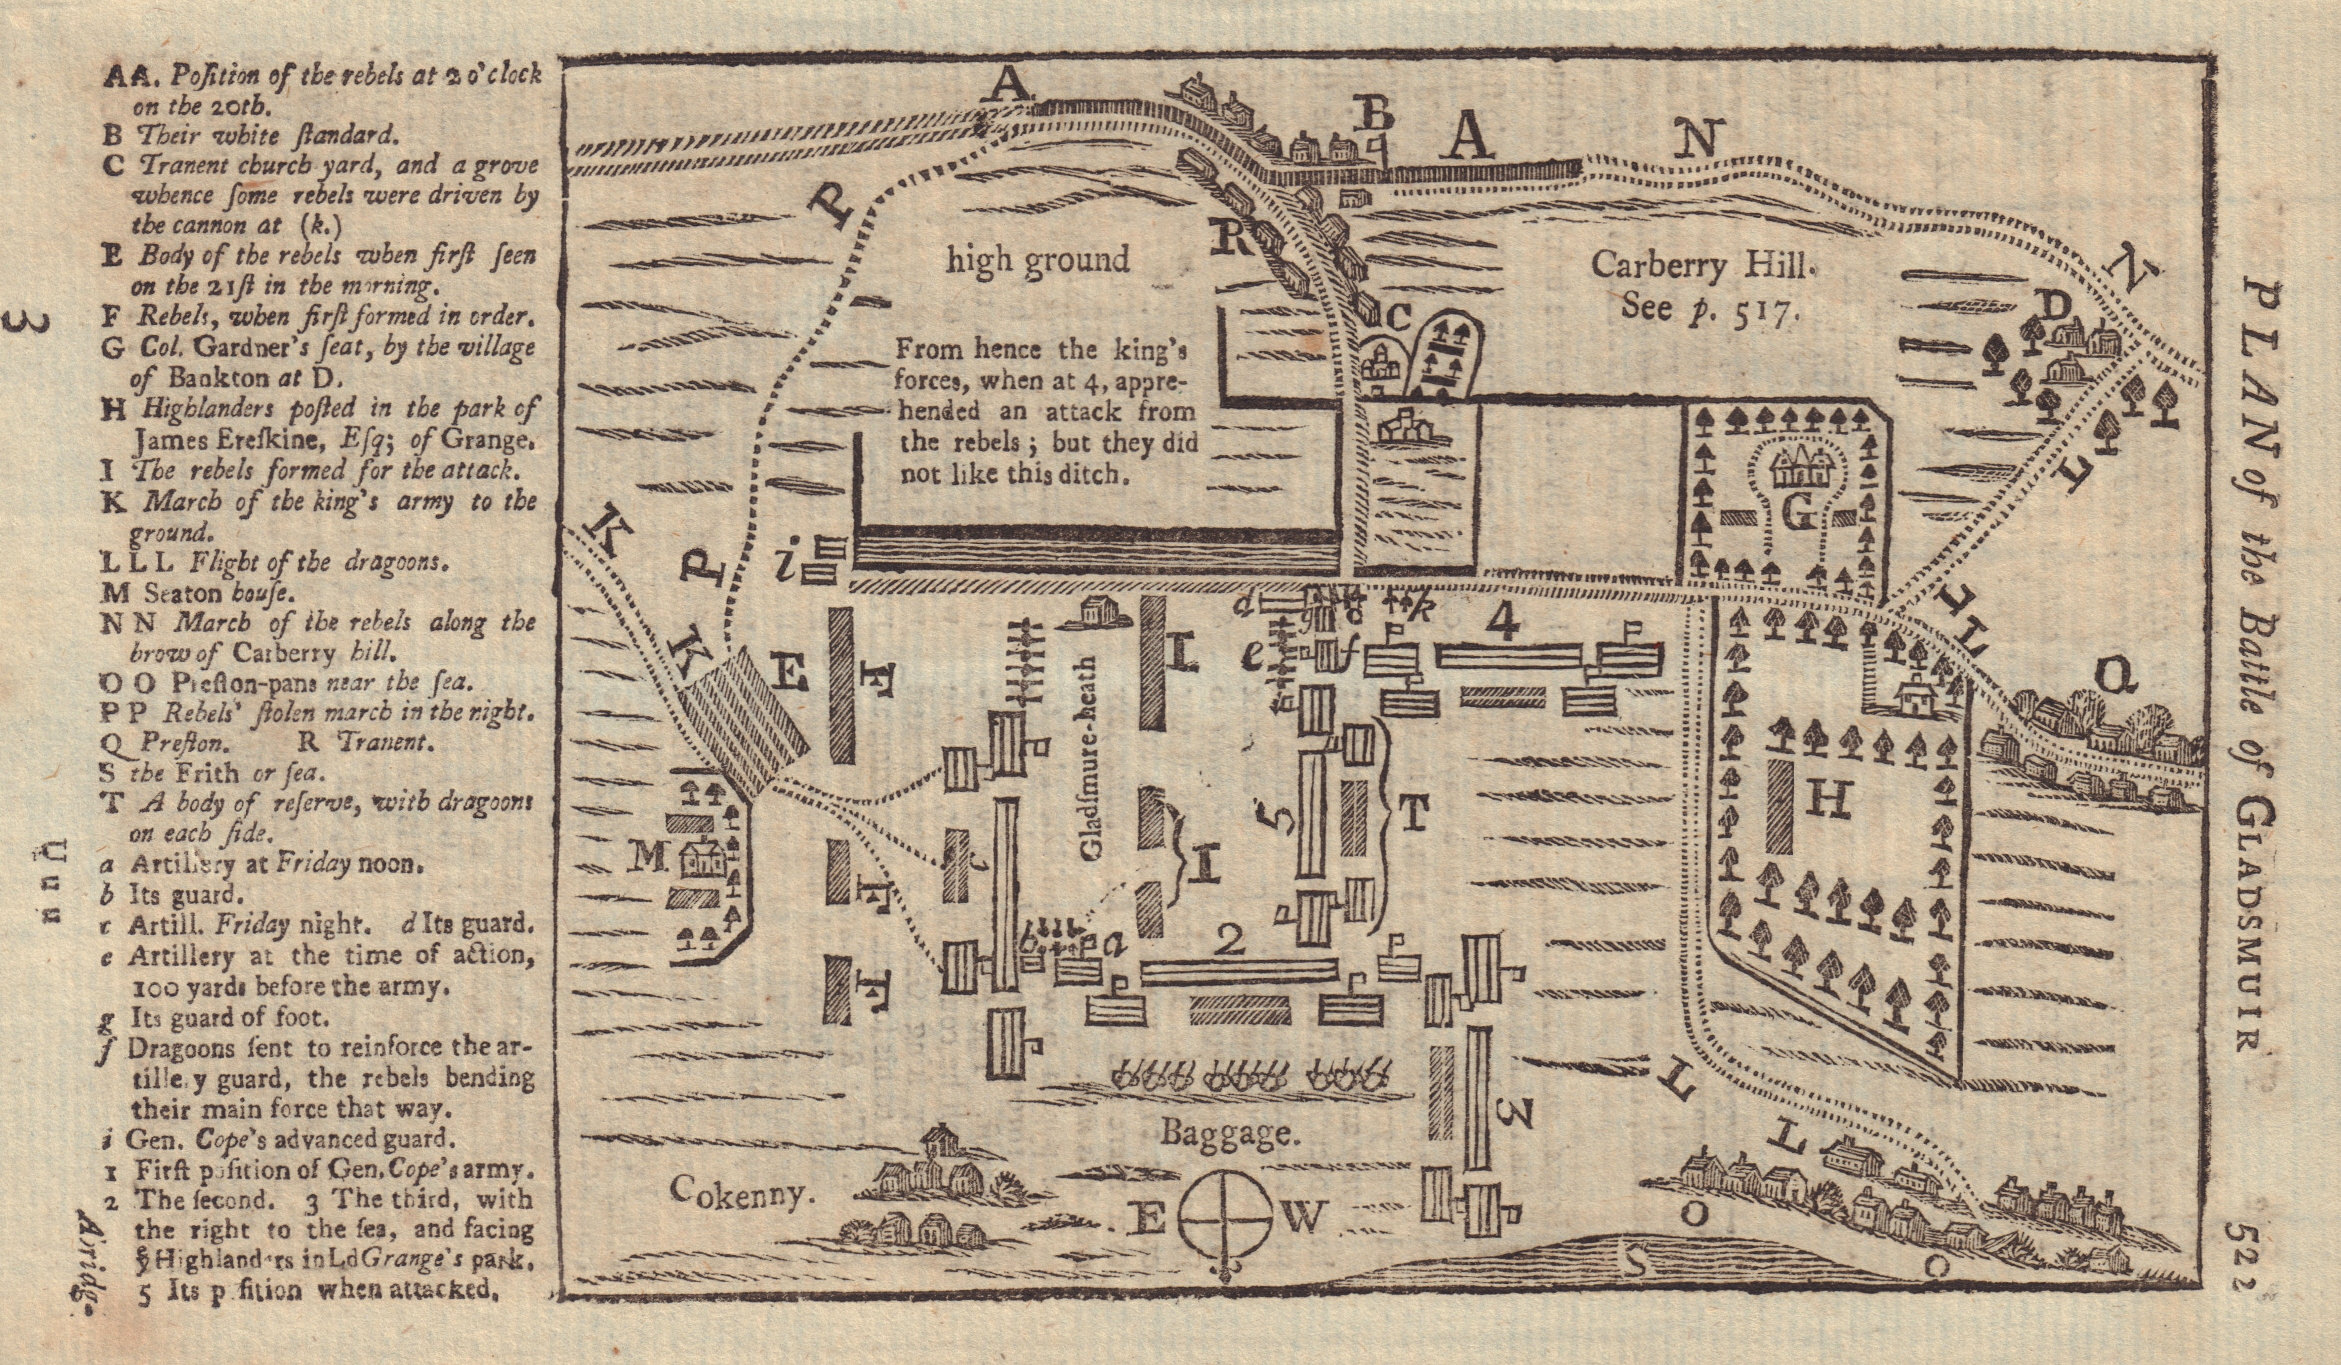 A Plan of the Battle of Gladsmuir [Prestonpans]. Scotland. GENTS MAG 1745 map